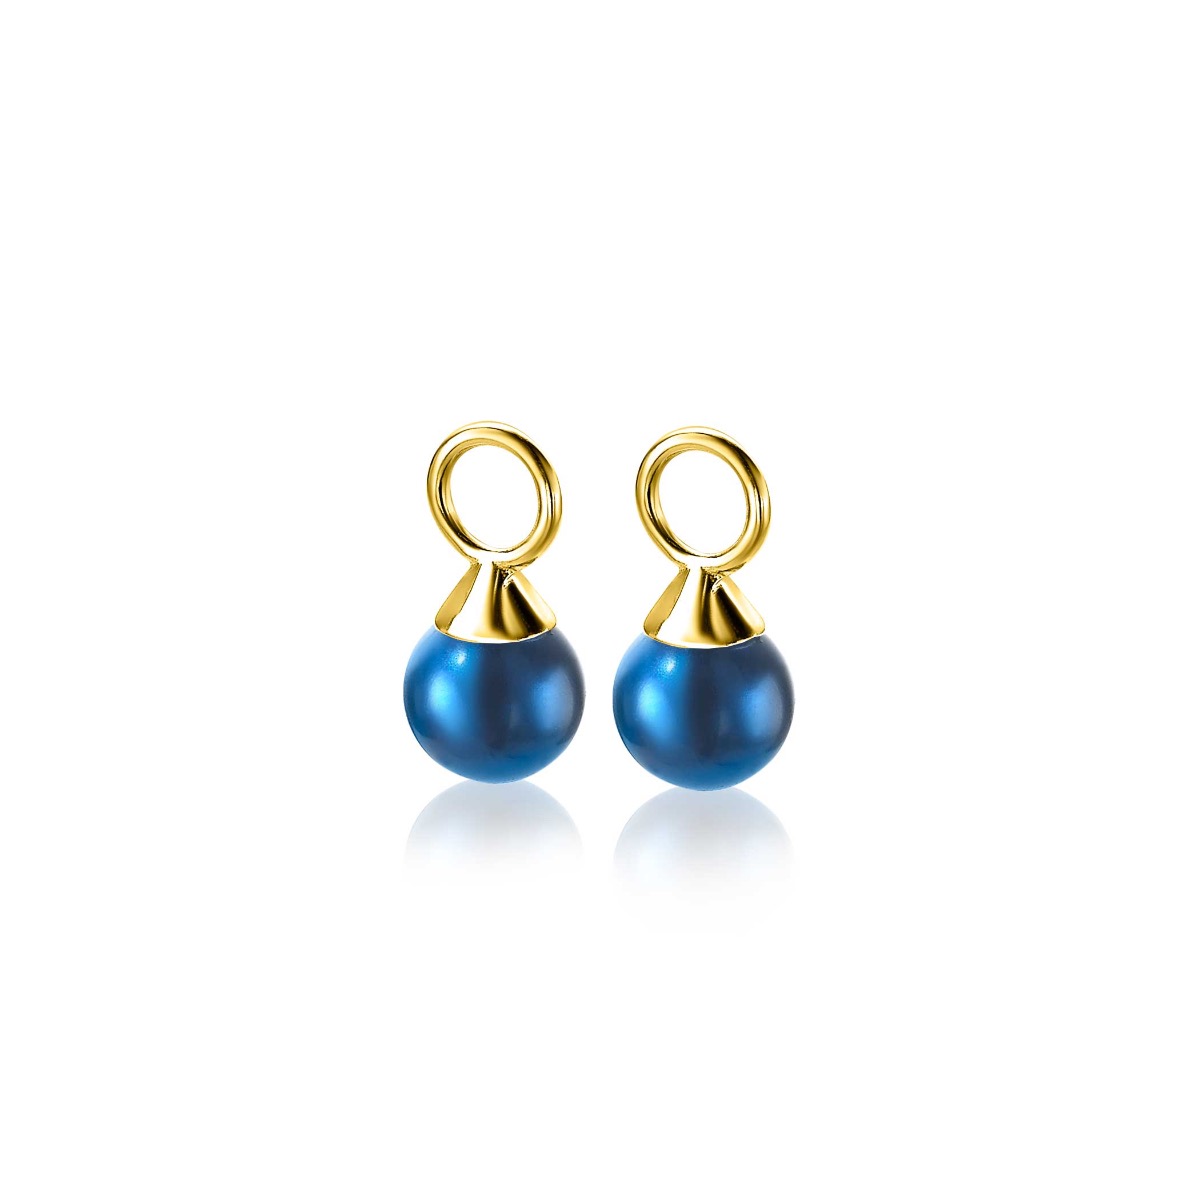 ZINZI Gold Plated Sterling Silver Earrings Pendants Pearls Blue ZICH1749BG (excl. hoop earrings)